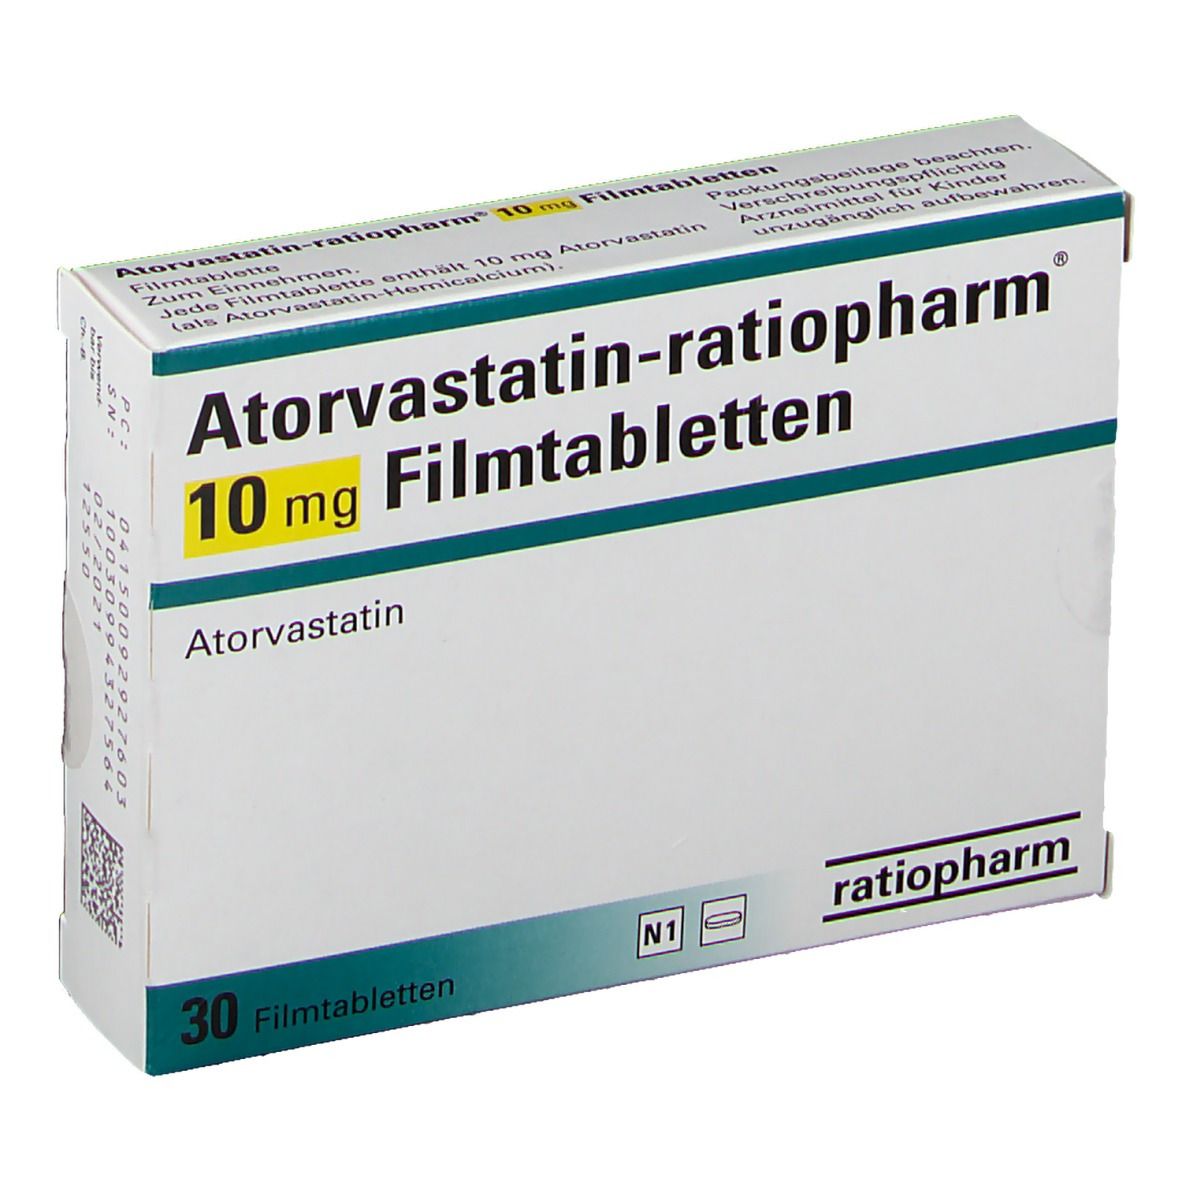 Atorvastatin-ratiopharm® 10 mg